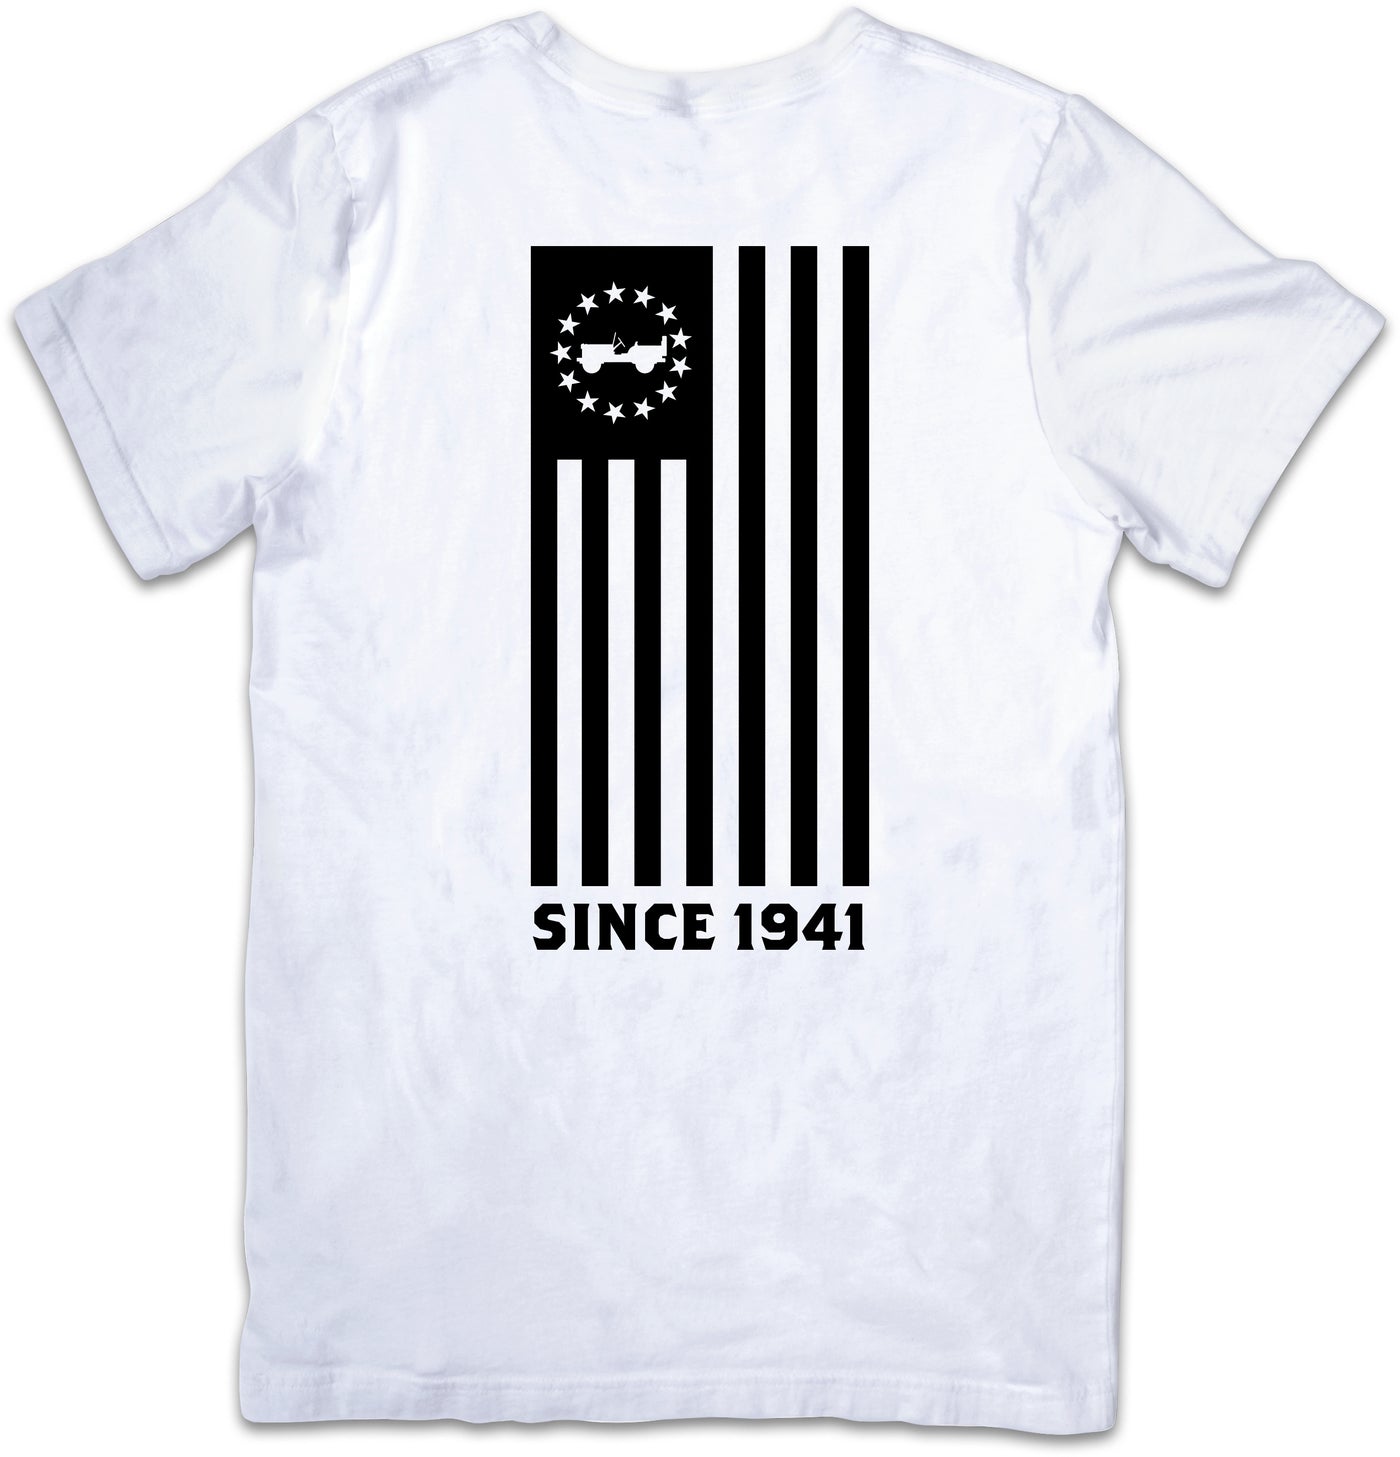 "Since 1941" Short Sleeve Logo Tee